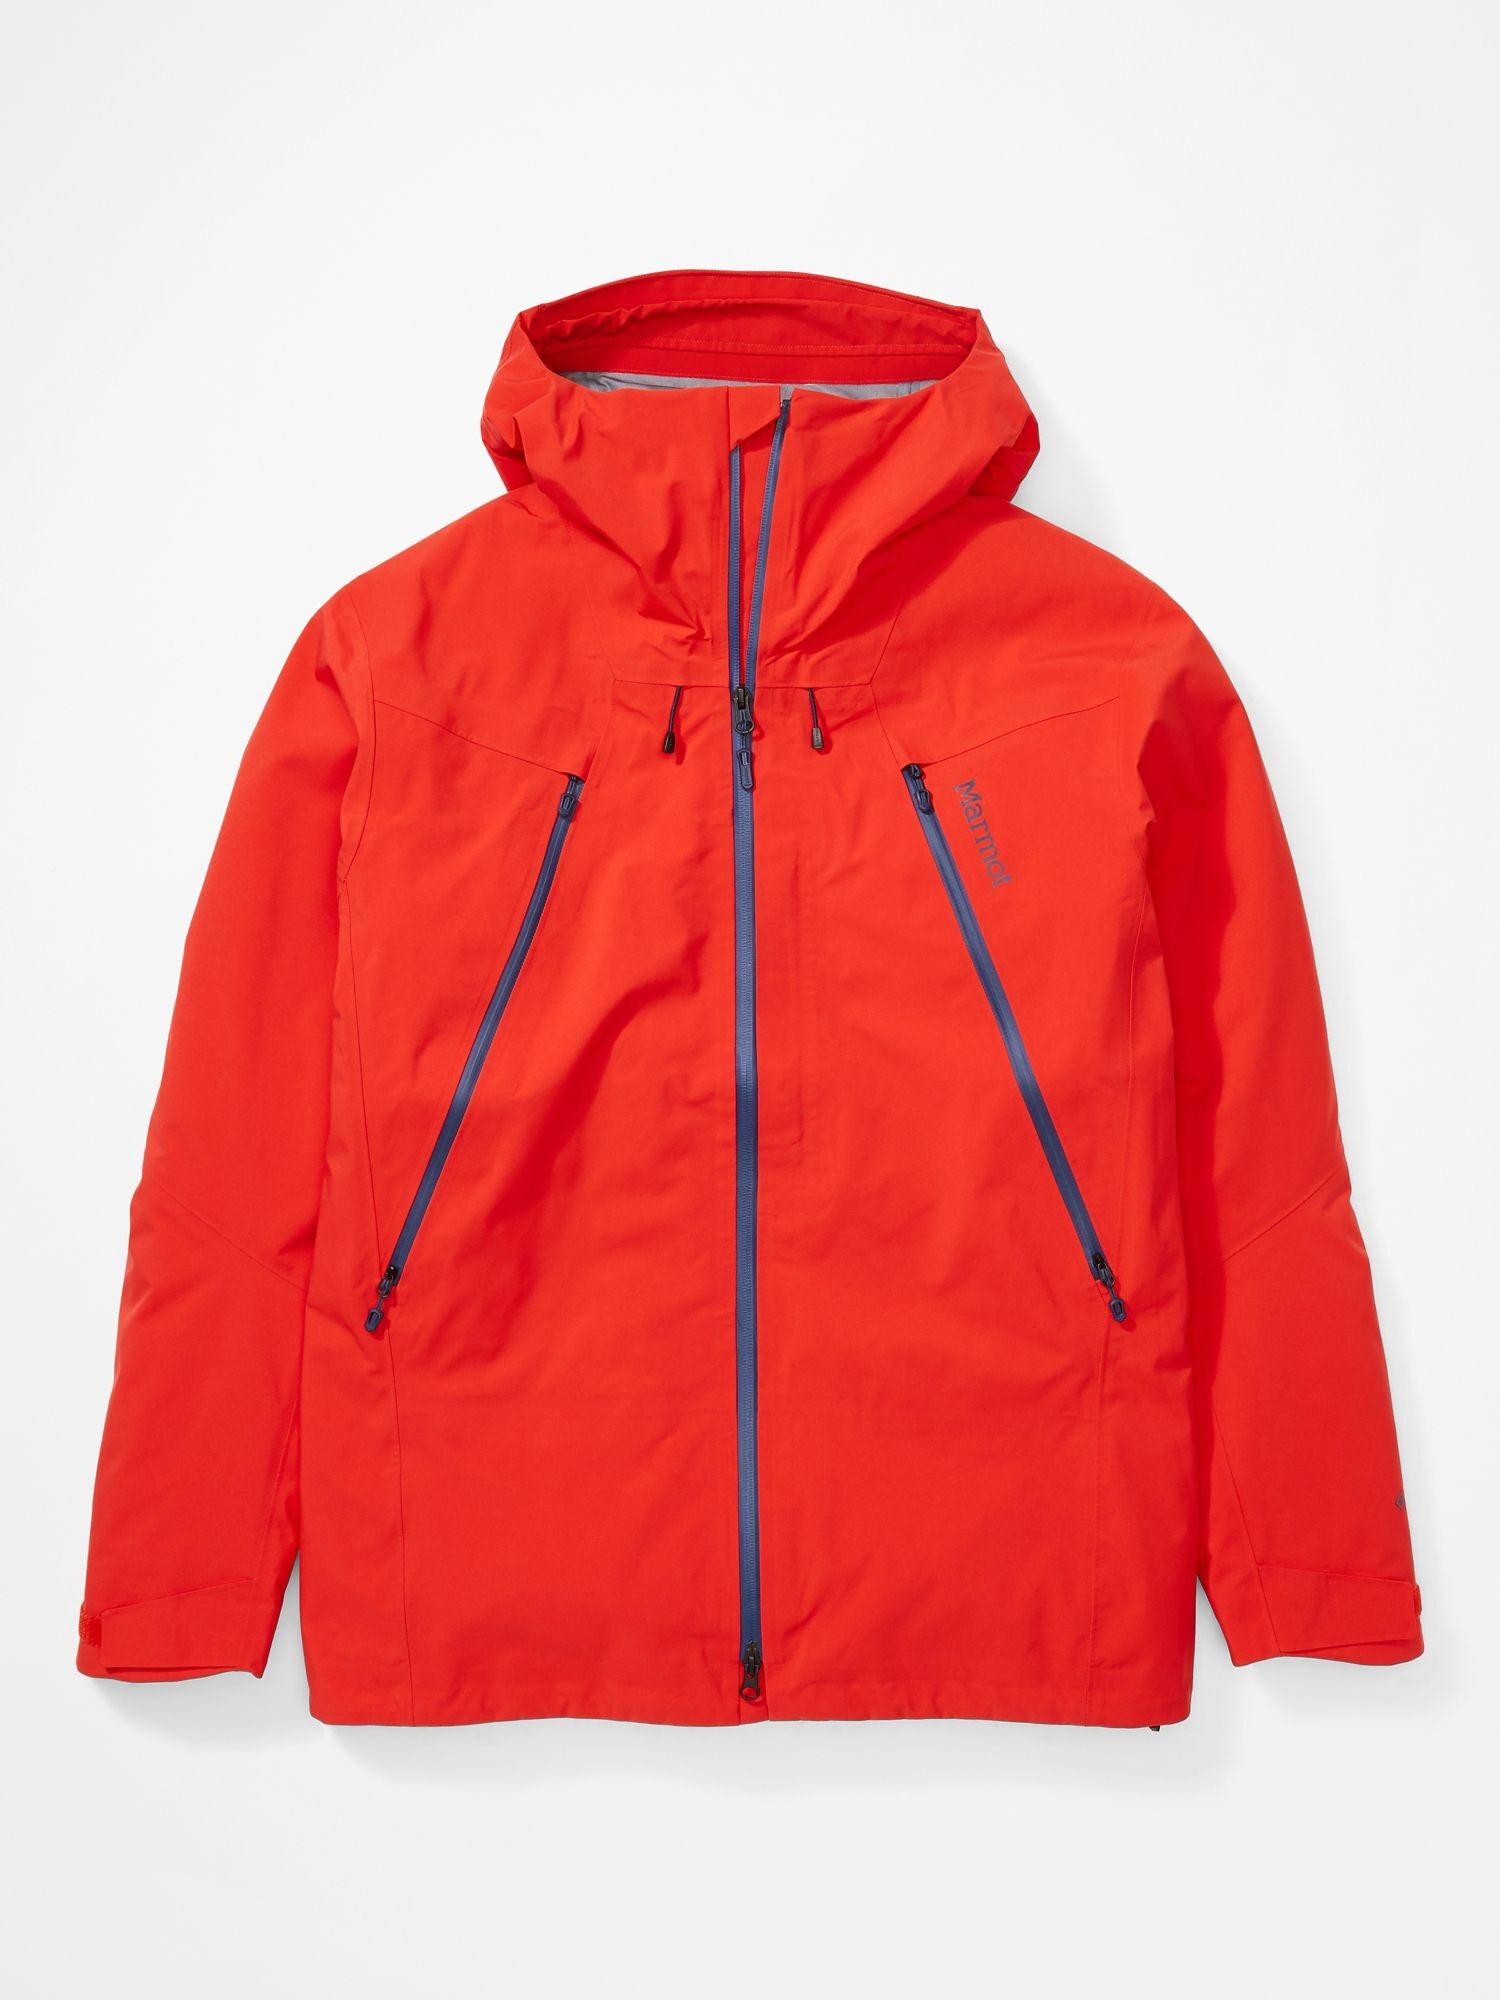 Marmot Alpinist Jacket - Regenjacke - Herren